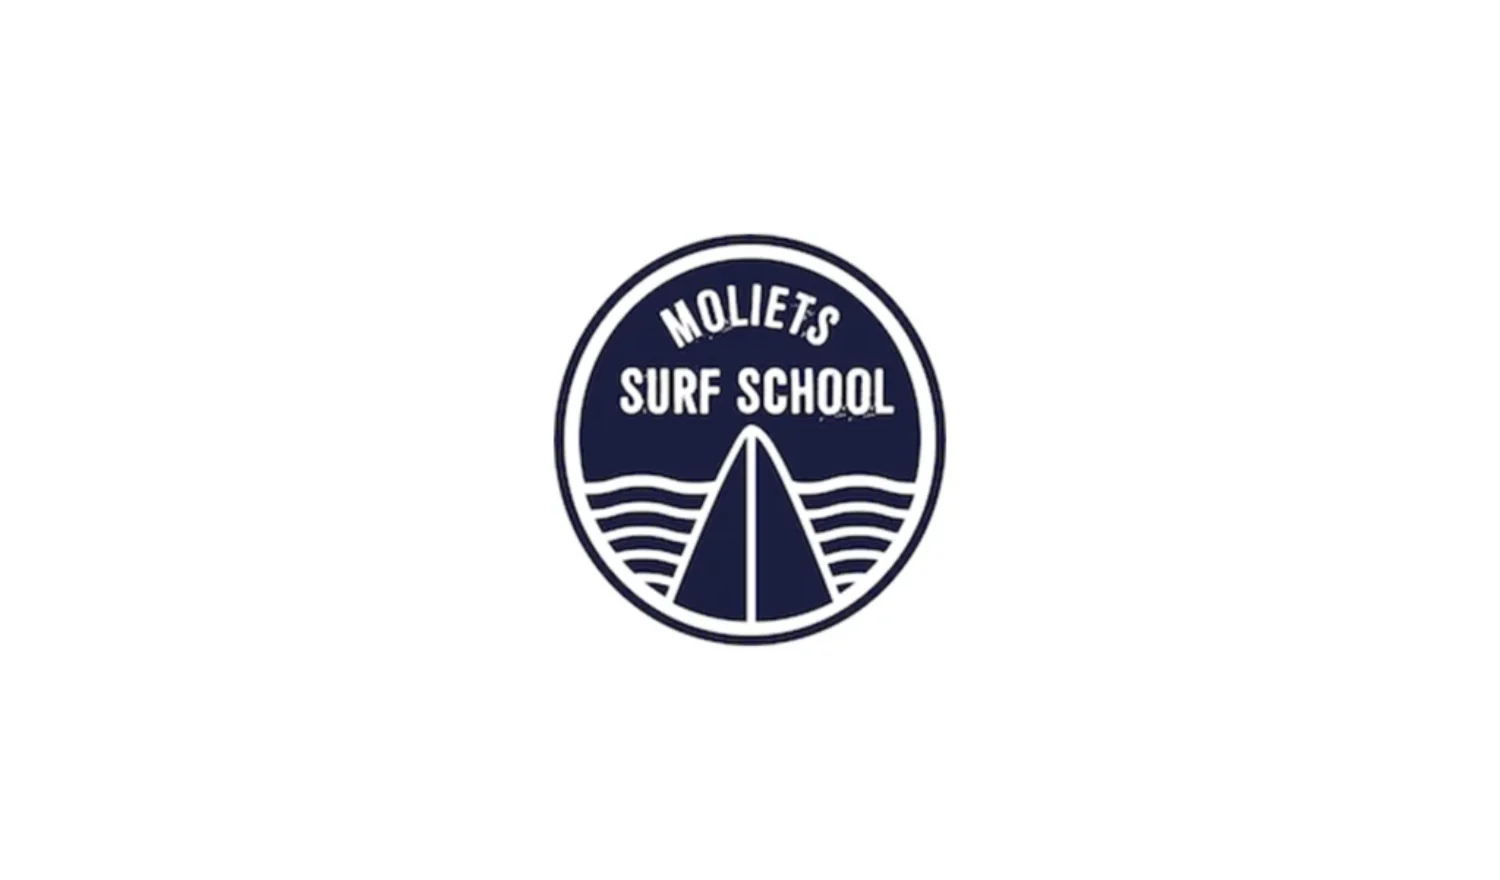 graphiste-logo-ecole-moliets-surf-school-hossegor